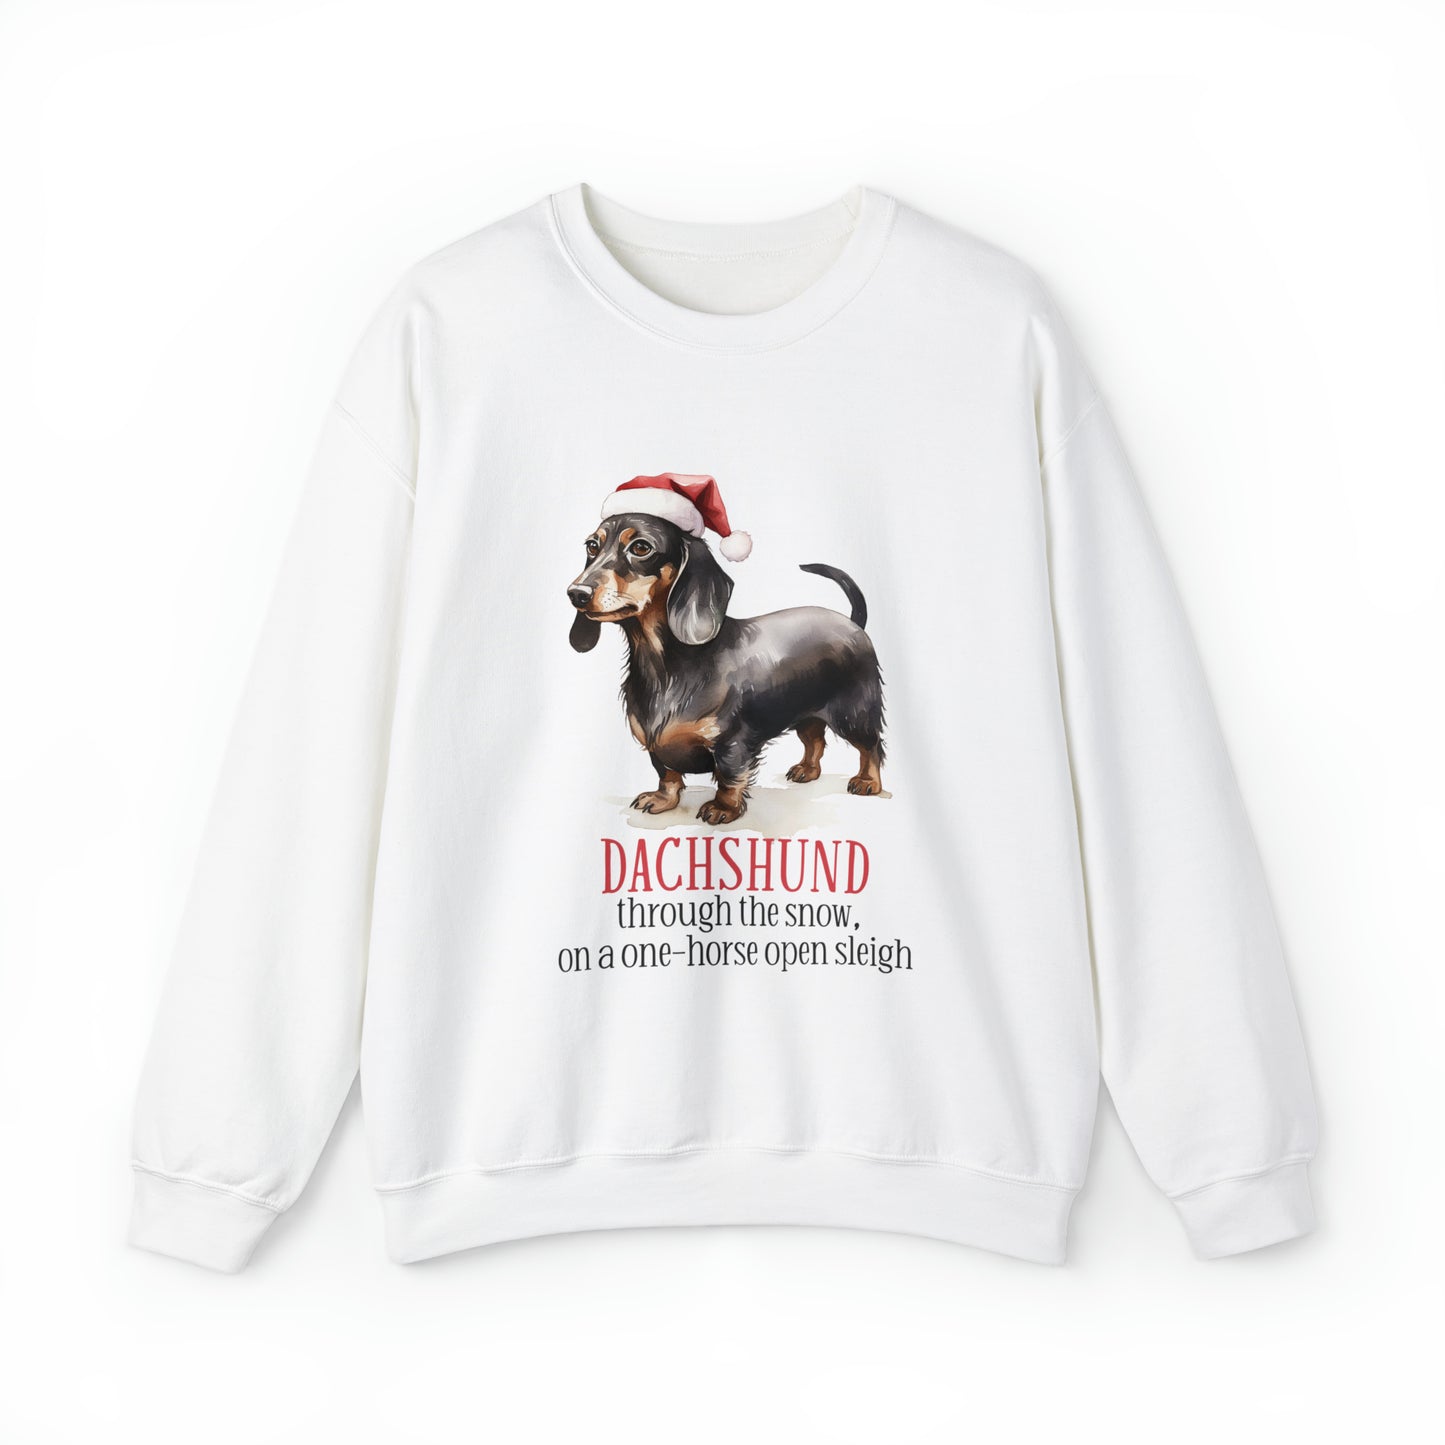 Dachshund Dog Christmas Funny Crewneck Sweatshirt Women's